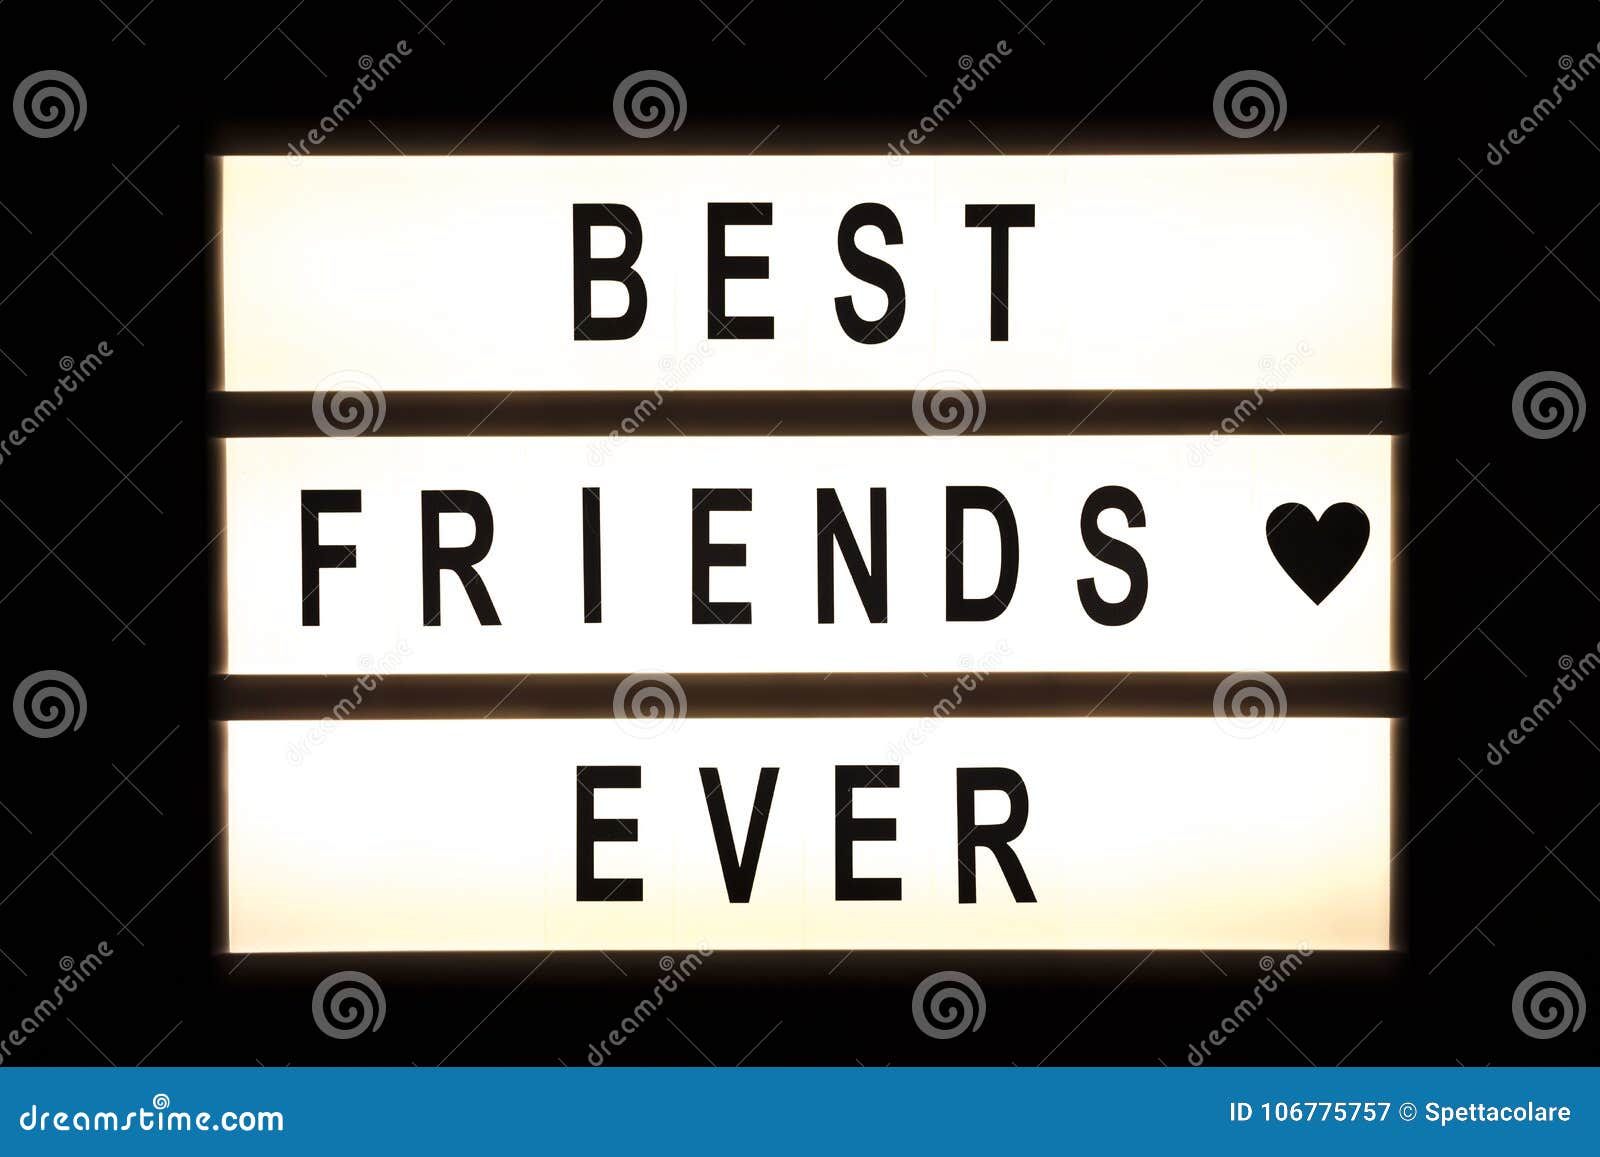 Best Friends Ever Hanging Light Box Stock Image - Image of frame